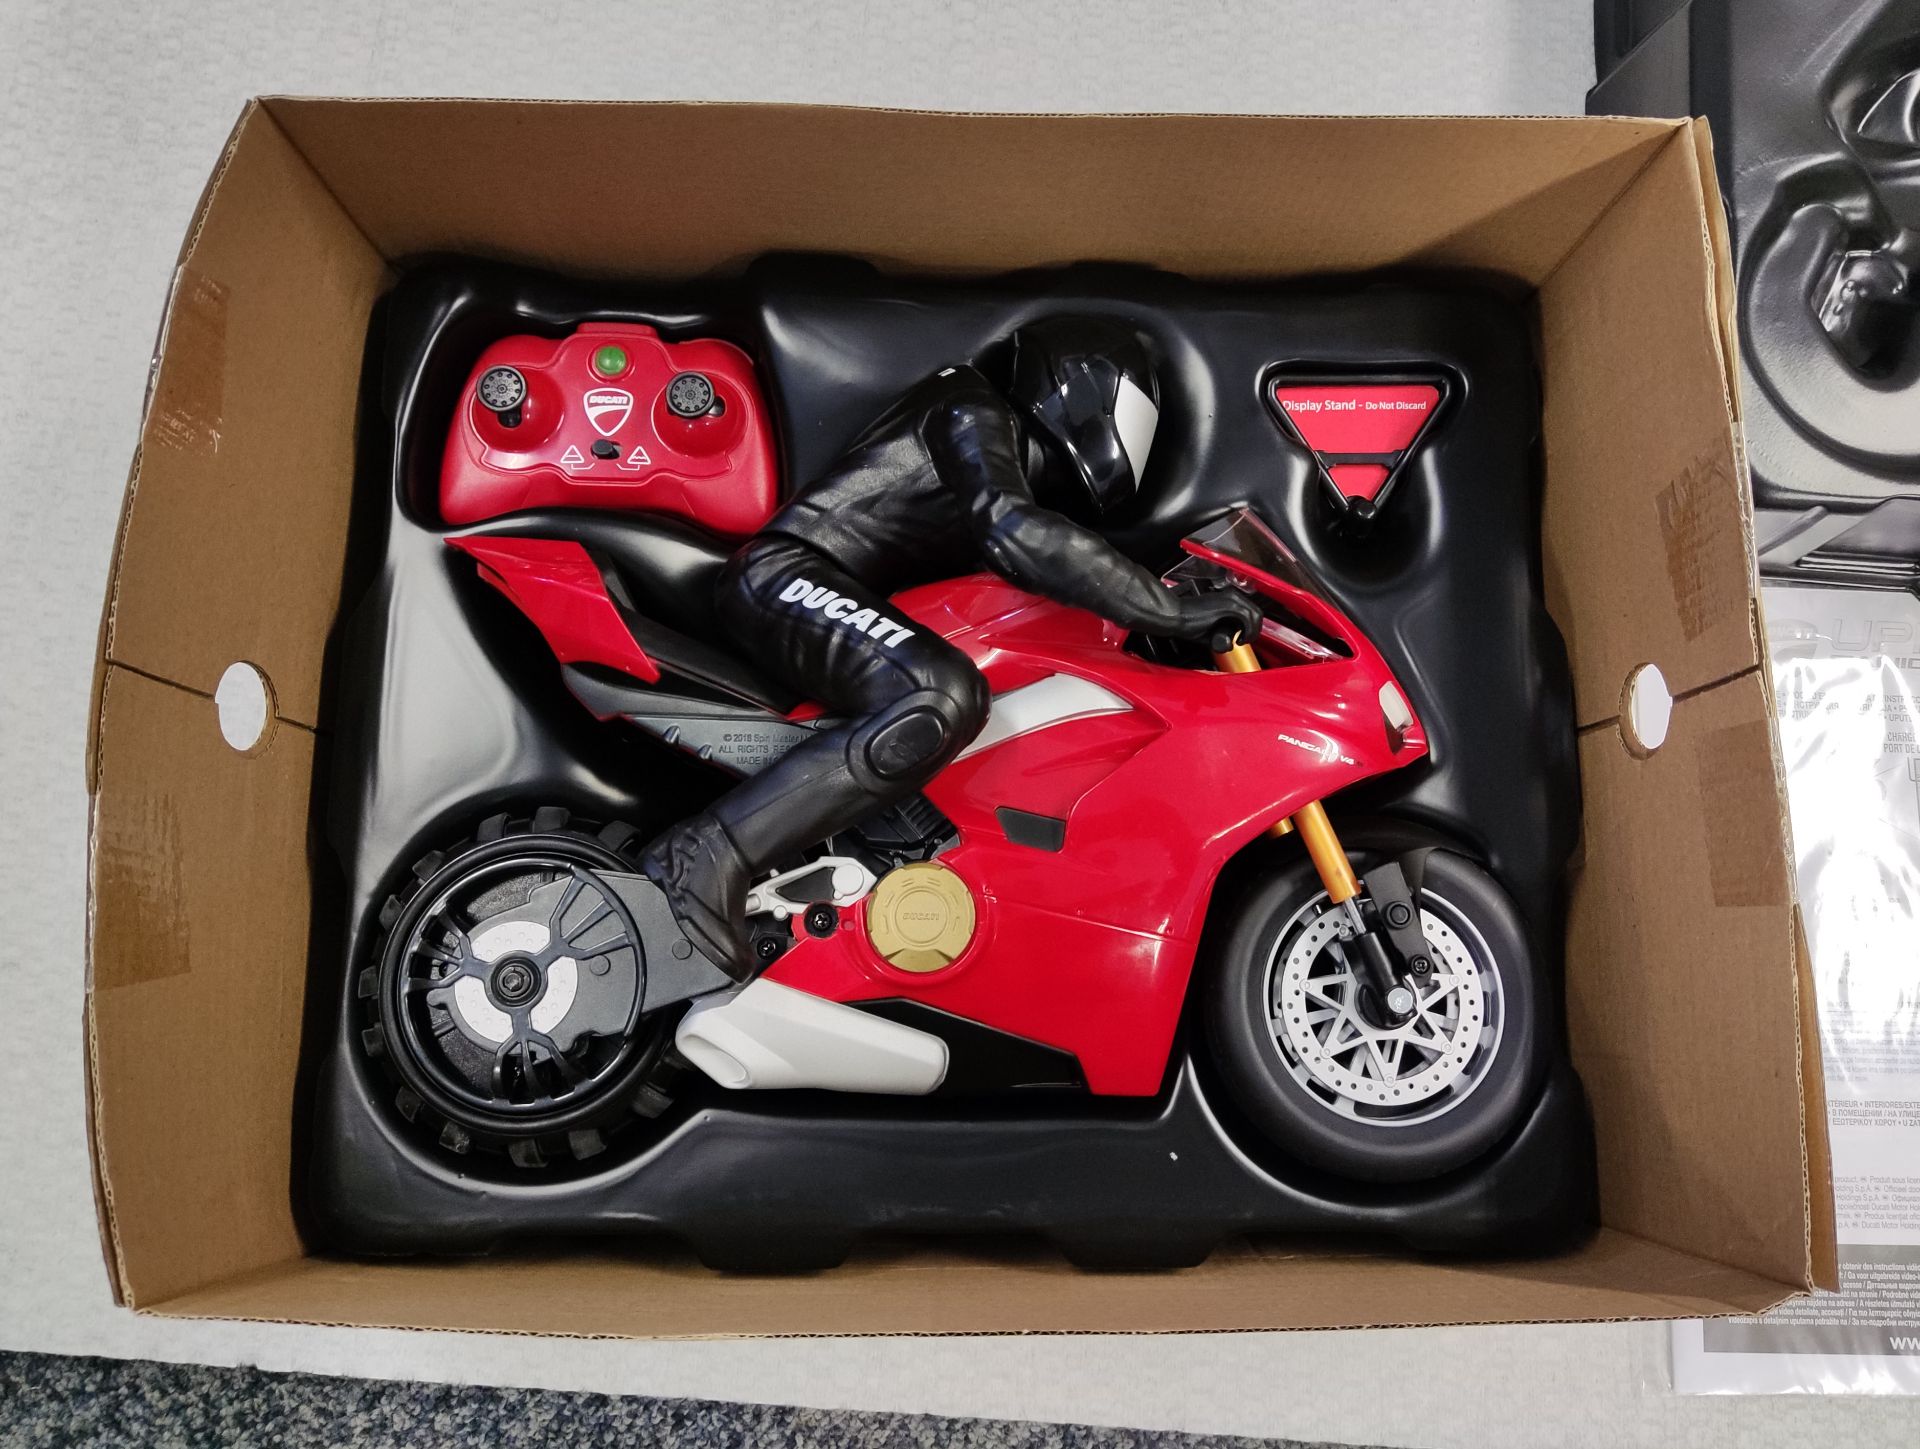 1 x Ducati Panigale V4S Upriser R/C Bike - New/Boxed - Image 4 of 9